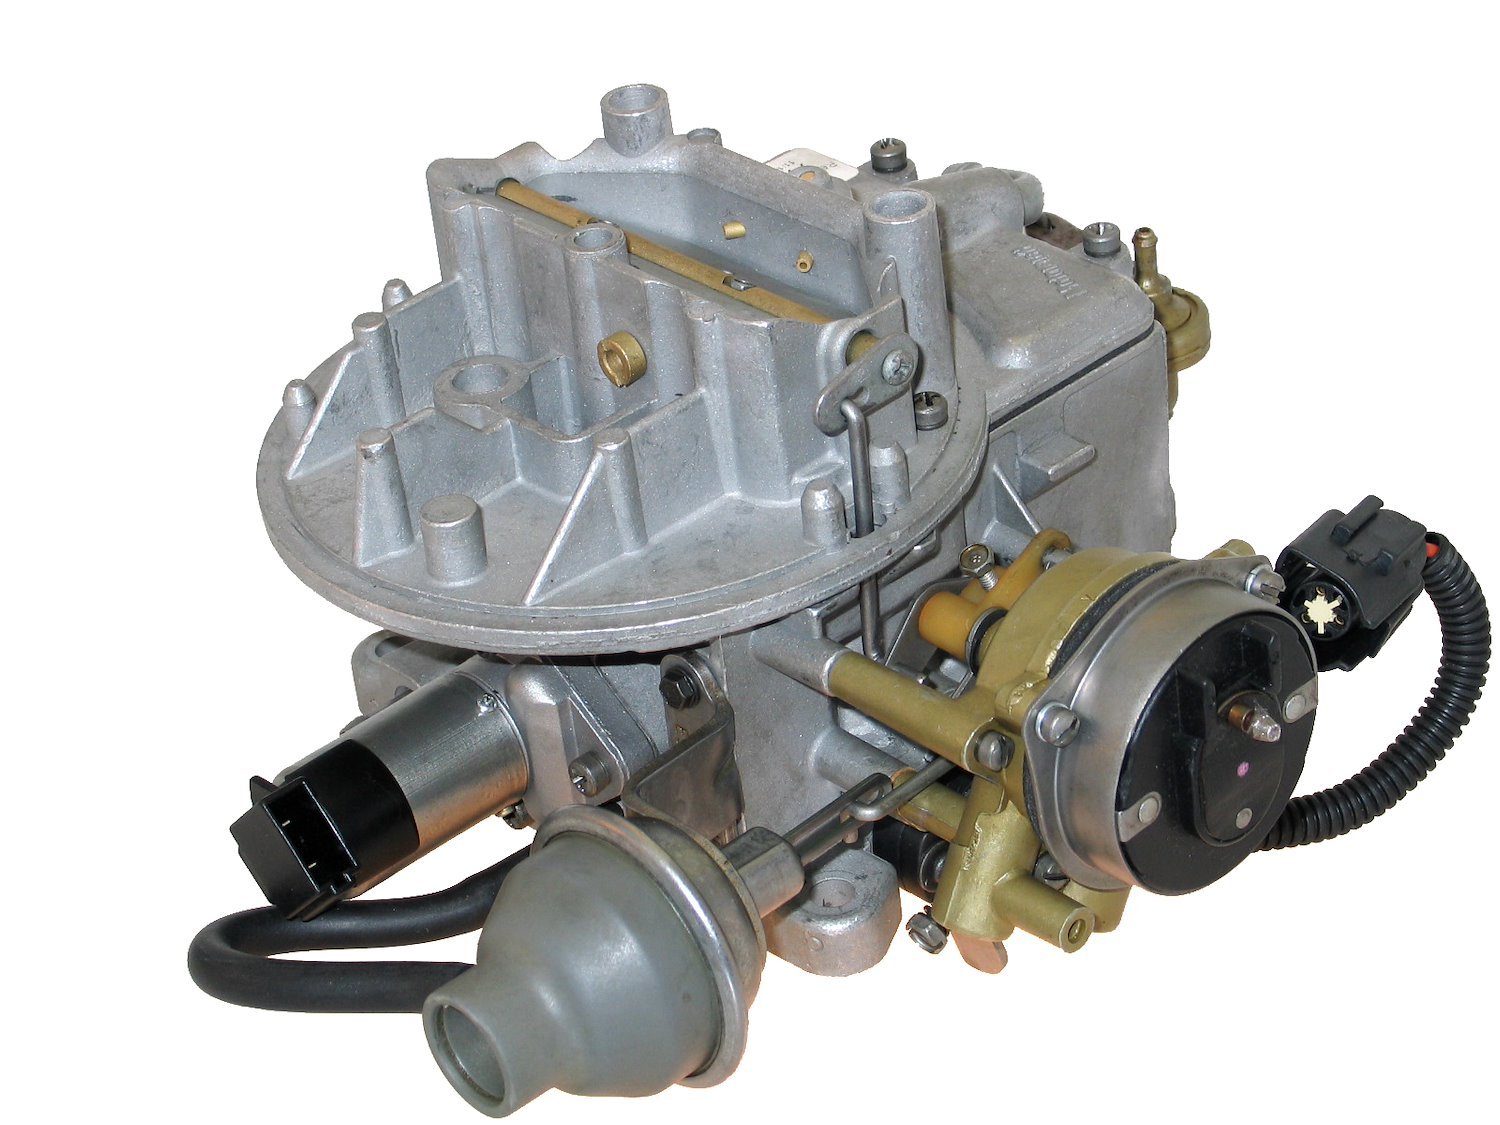 7-7771 Motorcraft Remanufactured Carburetor, 2150-Style